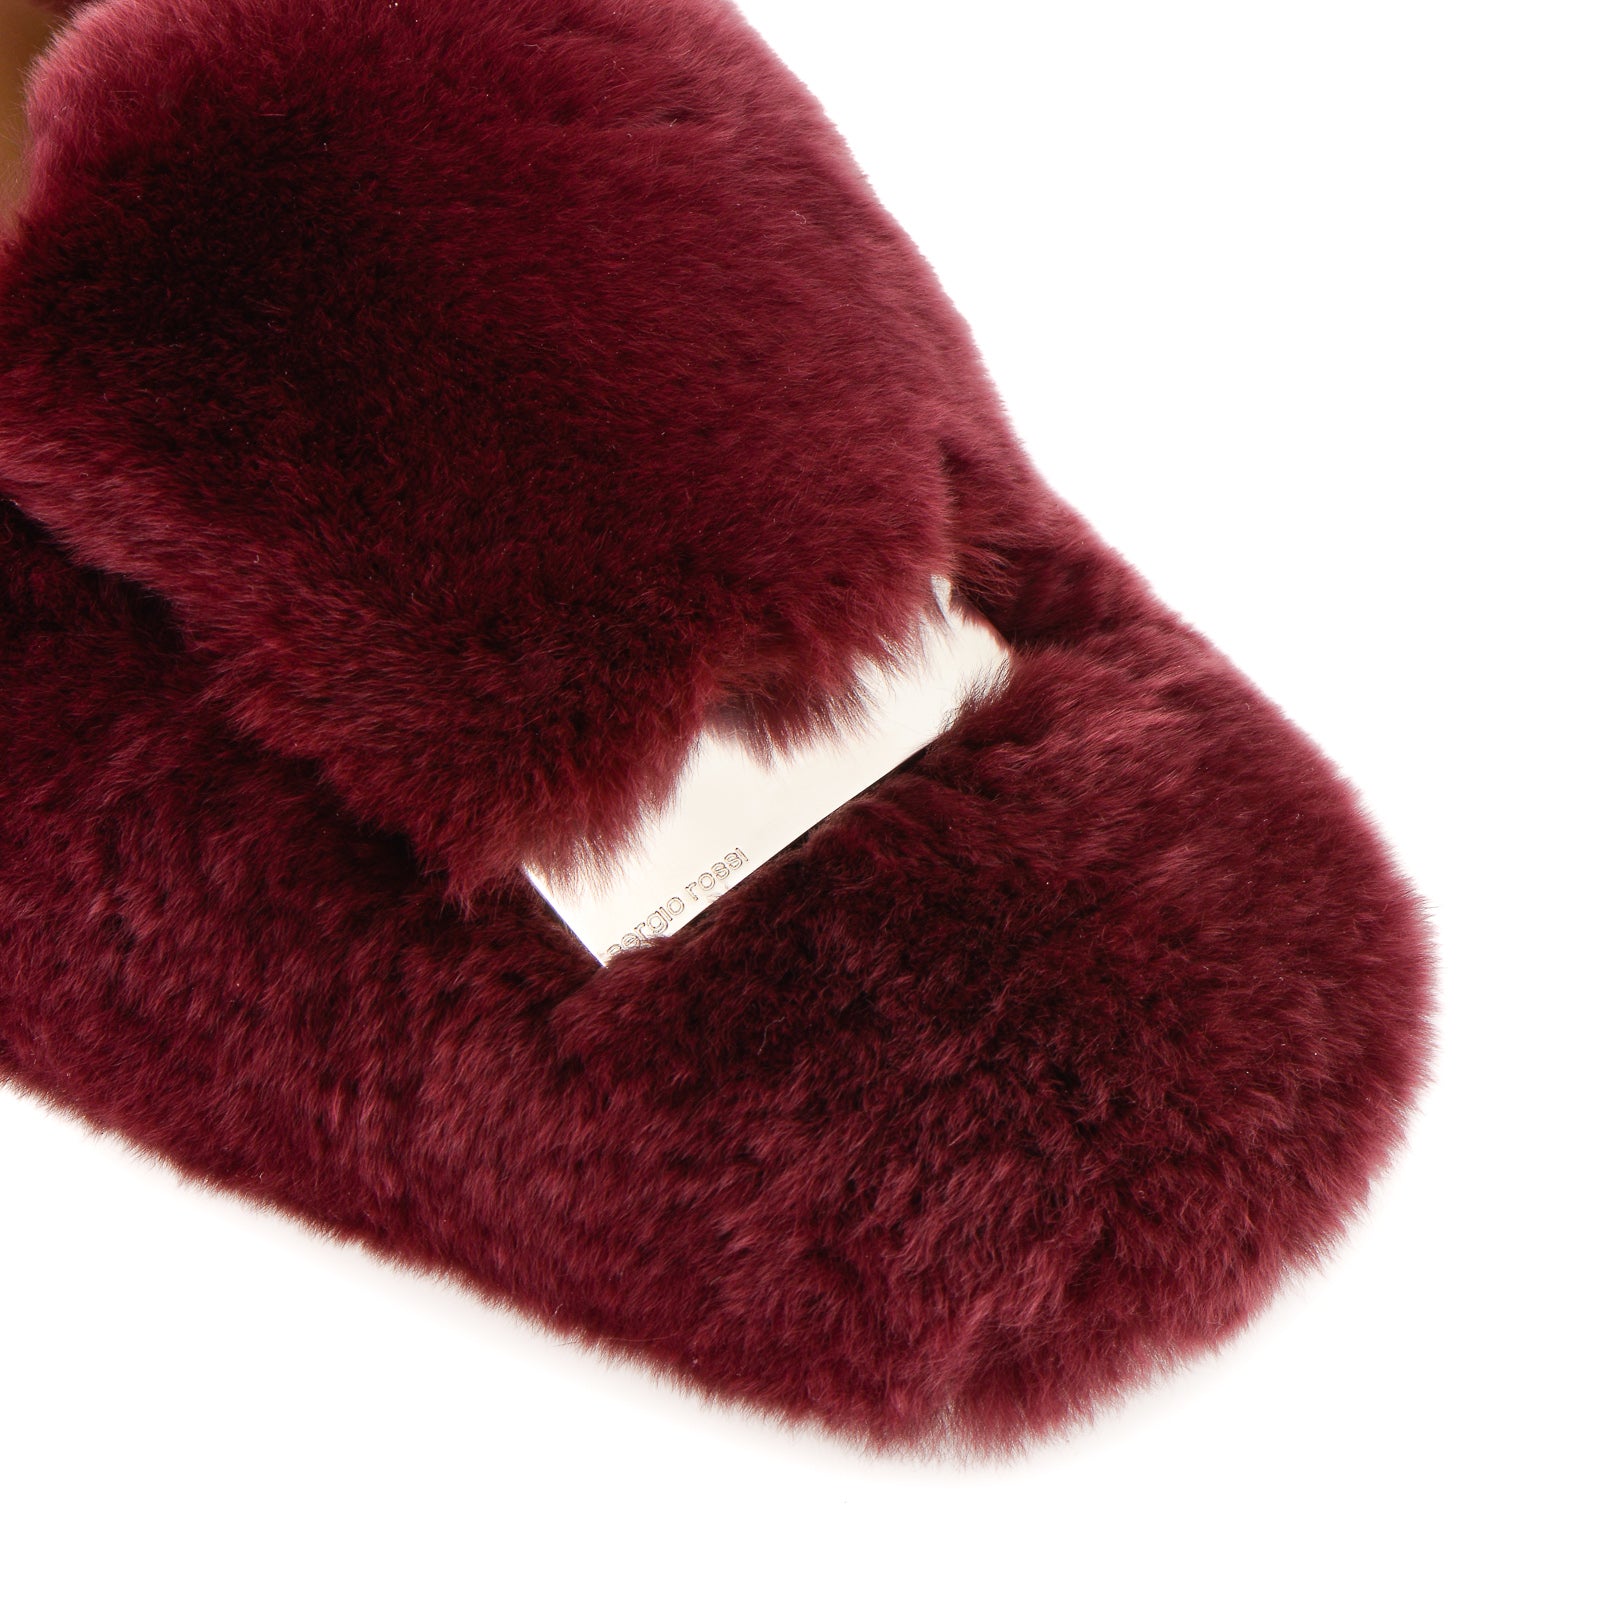 Sr1 fur loafers - Ruby